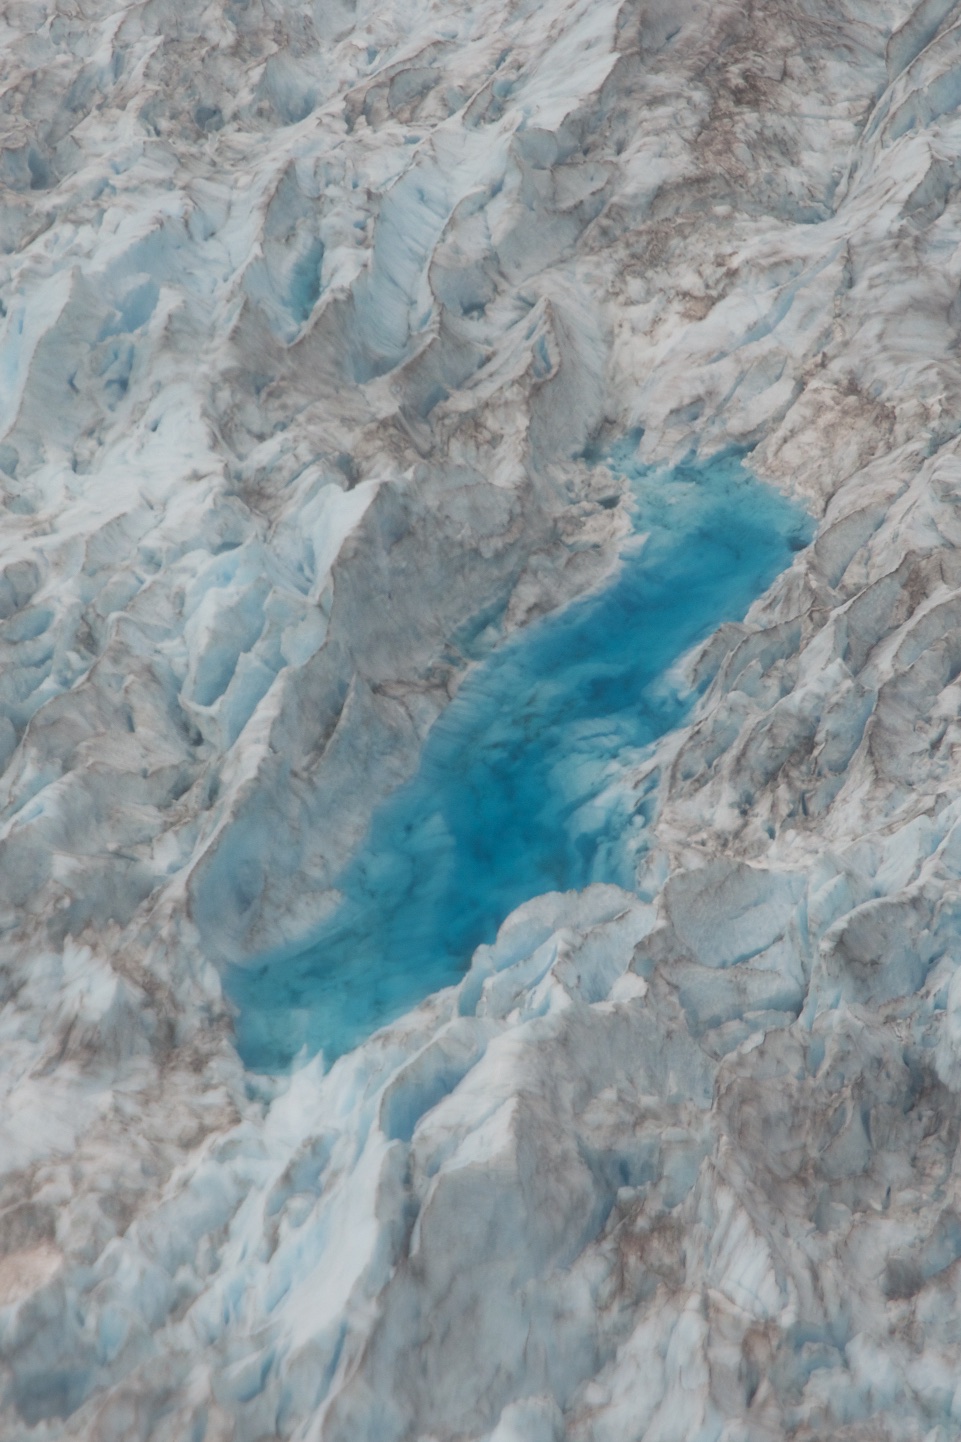  Leconte Glacier from the air, Petersburg, Alaska 